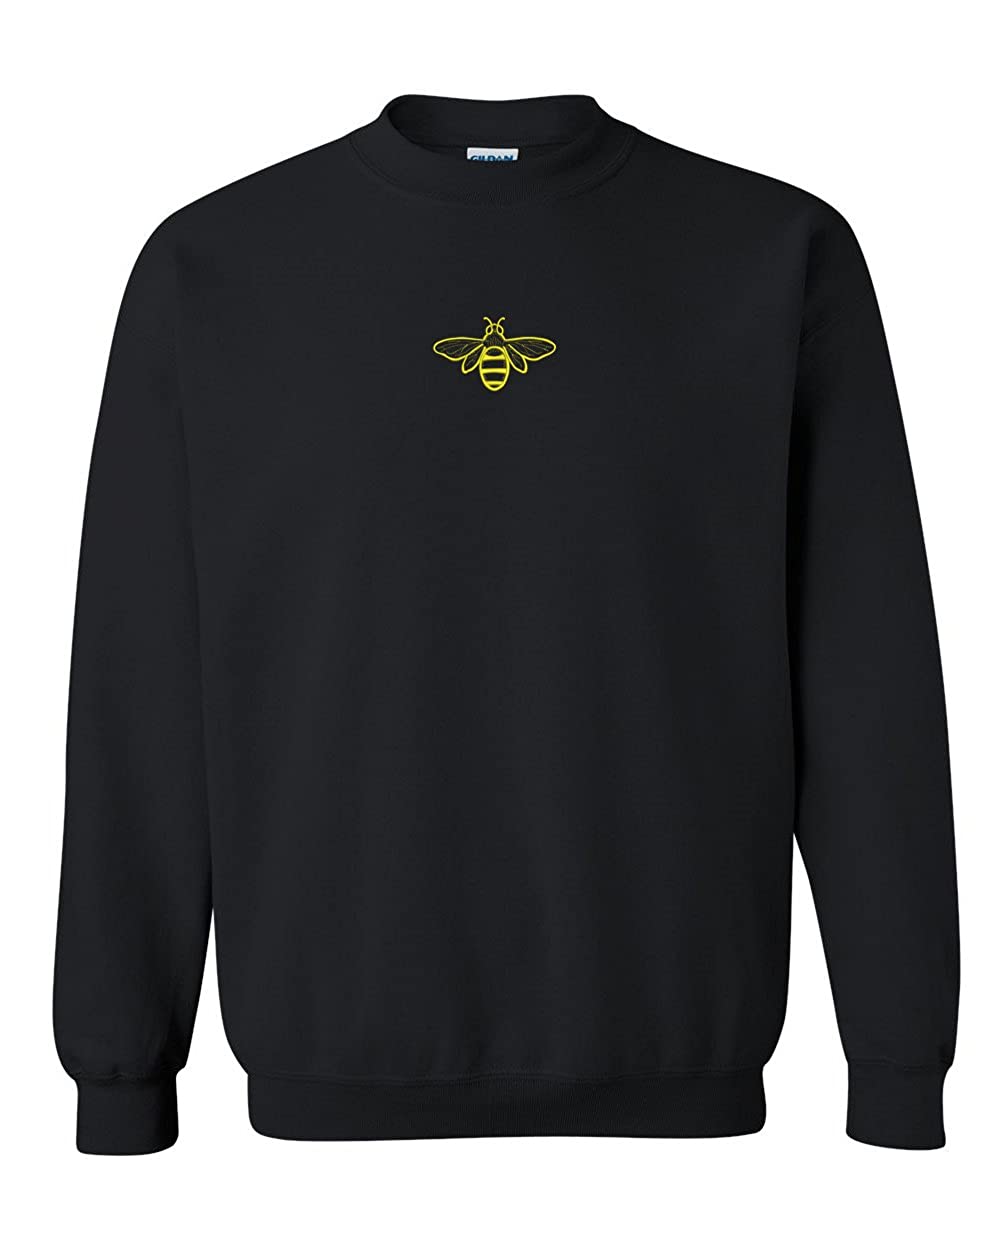 Trendy Apparel Shop Bee Embroidered Crewneck Sweatshirt - Black - 2XL